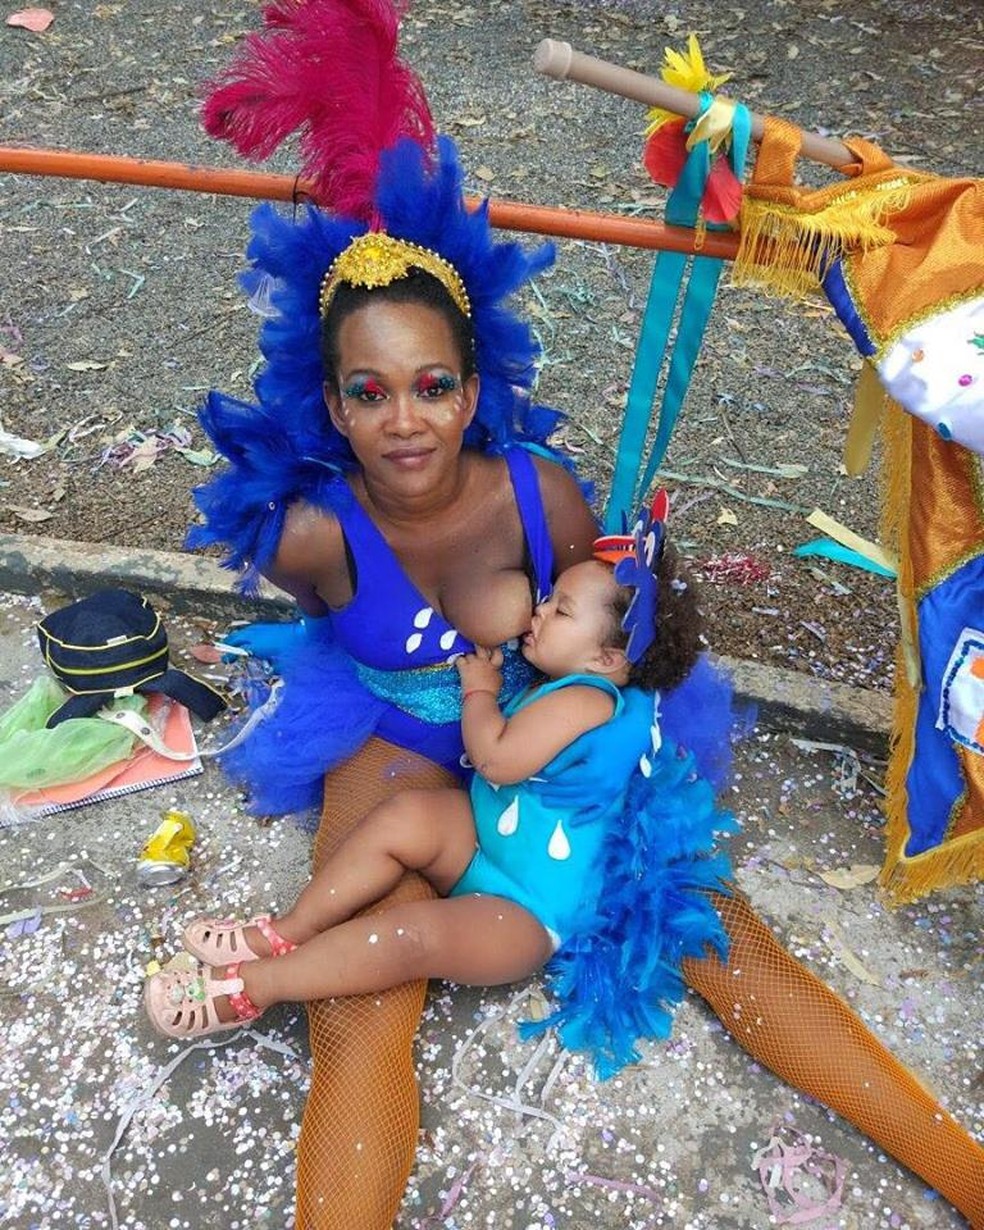 Foliã amamenta bebê no bloco infantil Tindôtetê, em São Paulo (Foto: Divulgação/Tindôtetê)